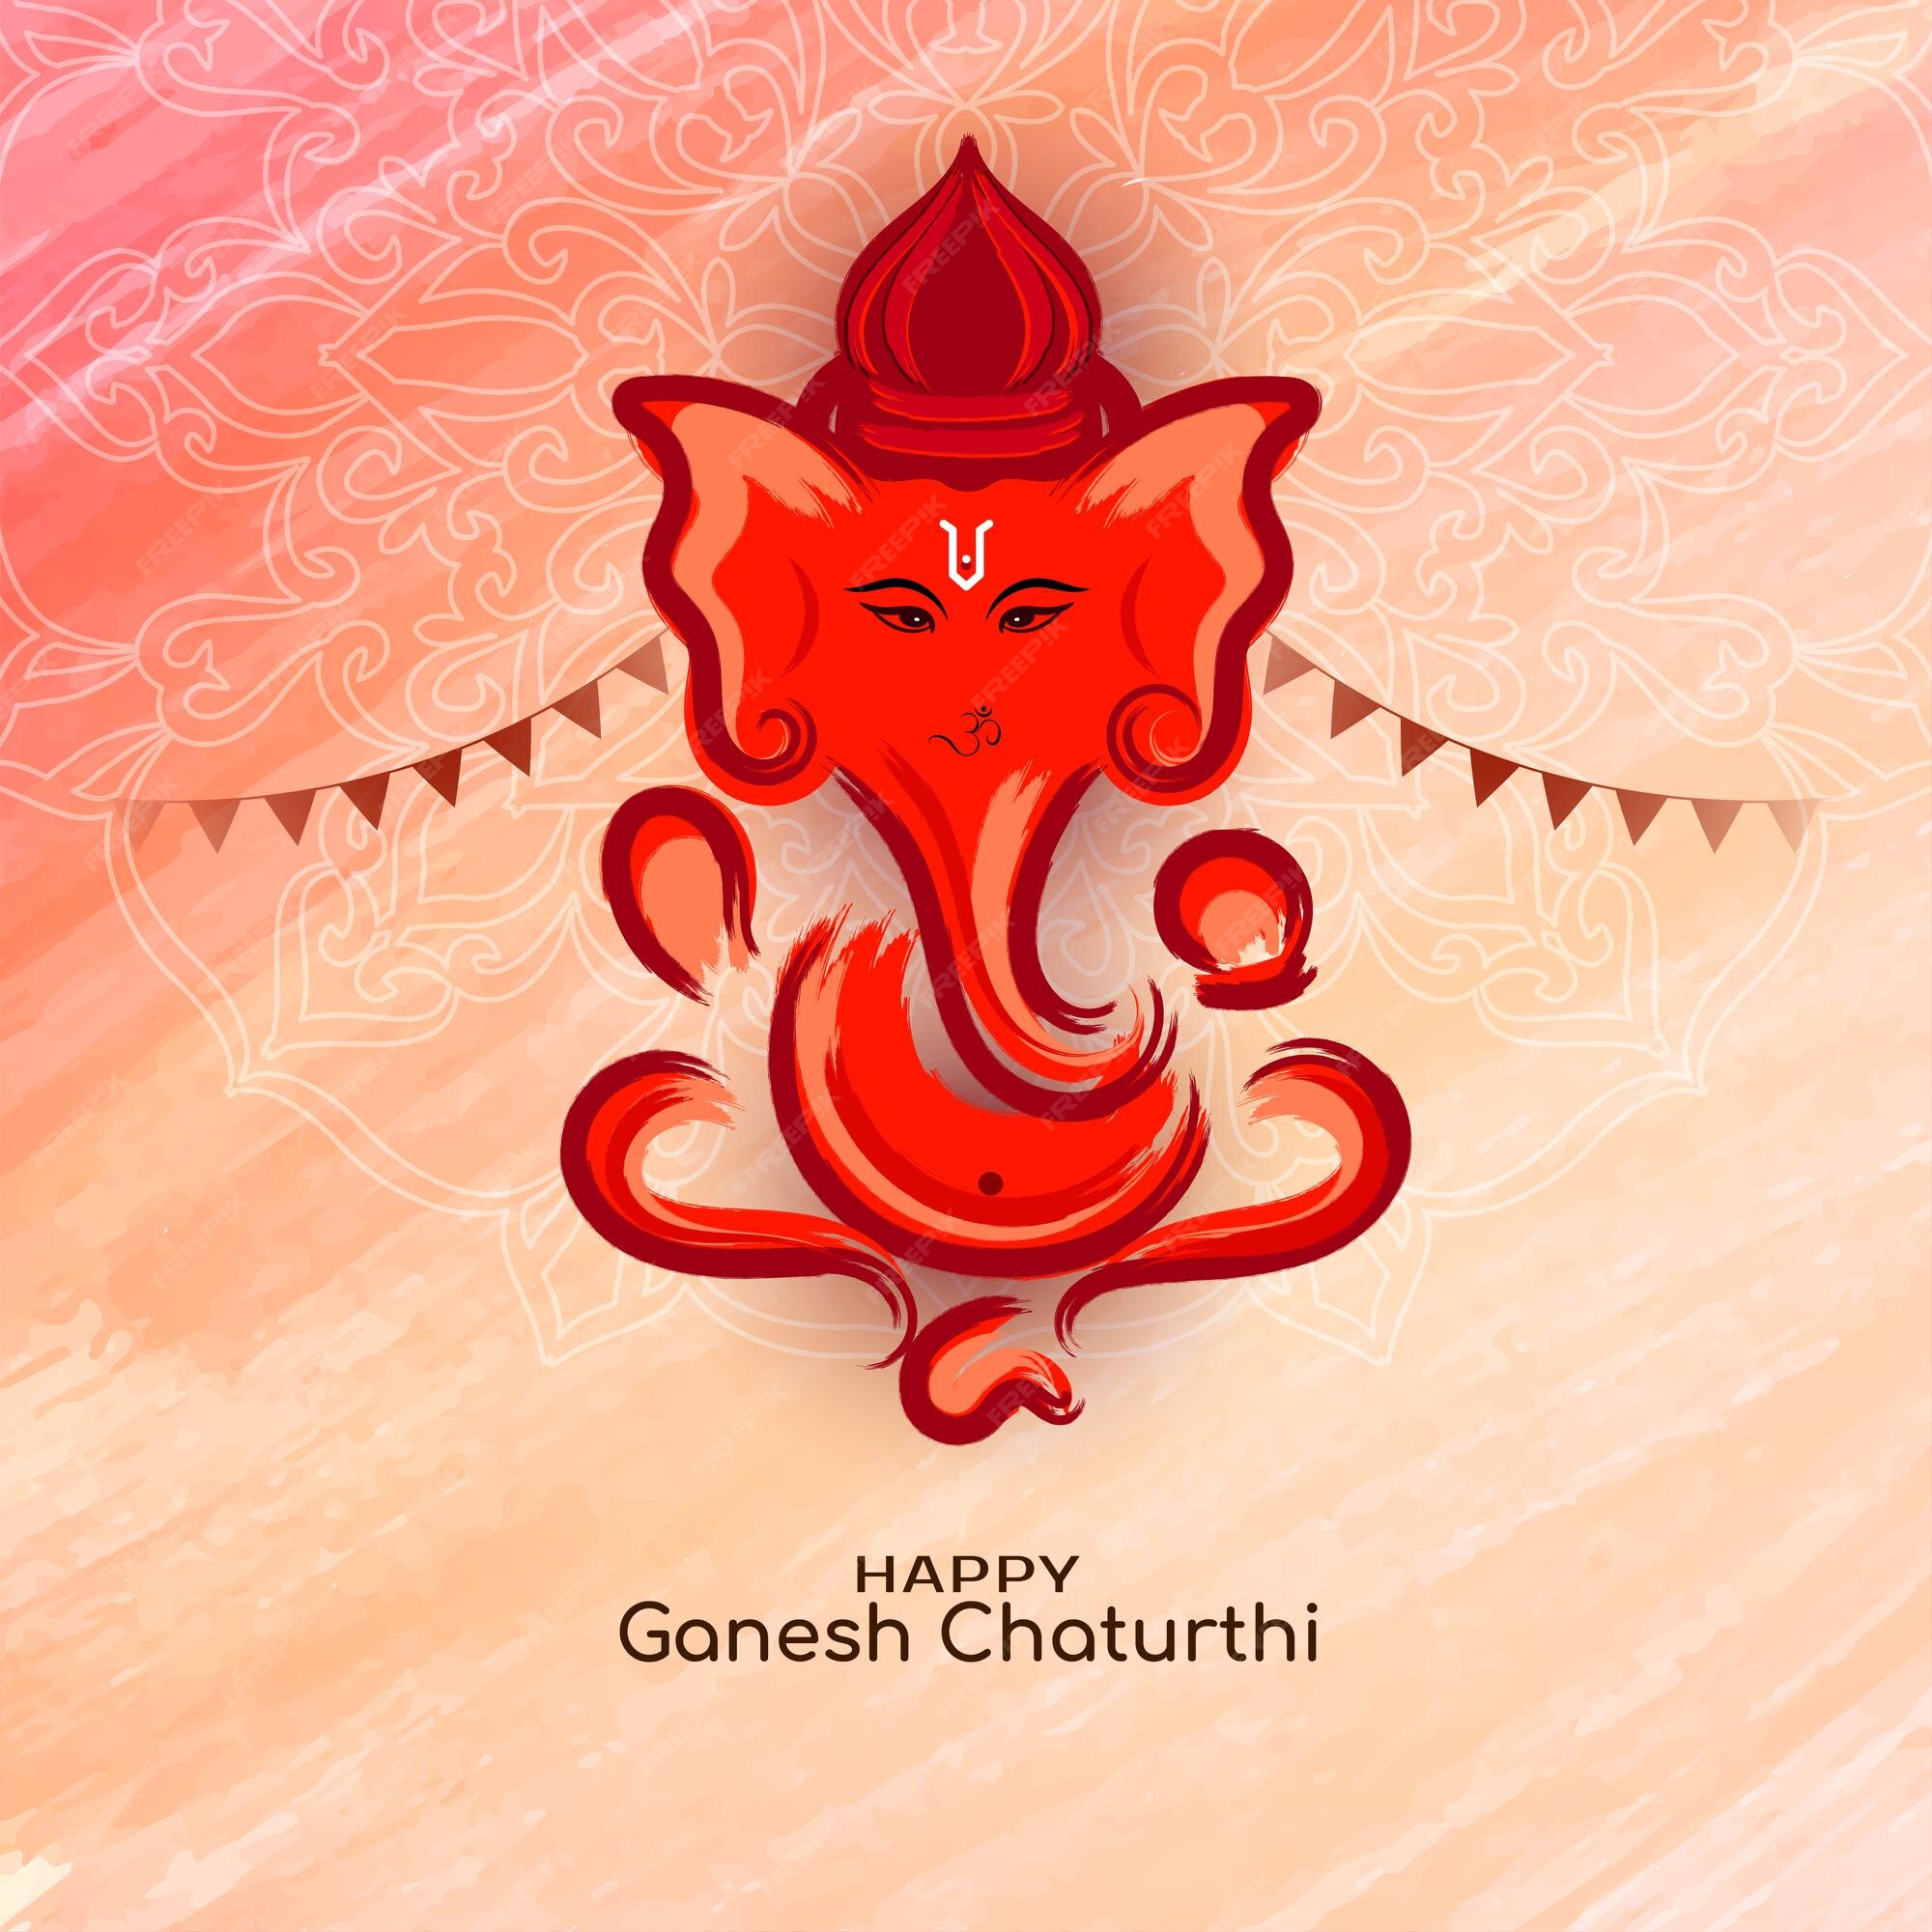 Ganesha Images - Free Download on Freepik